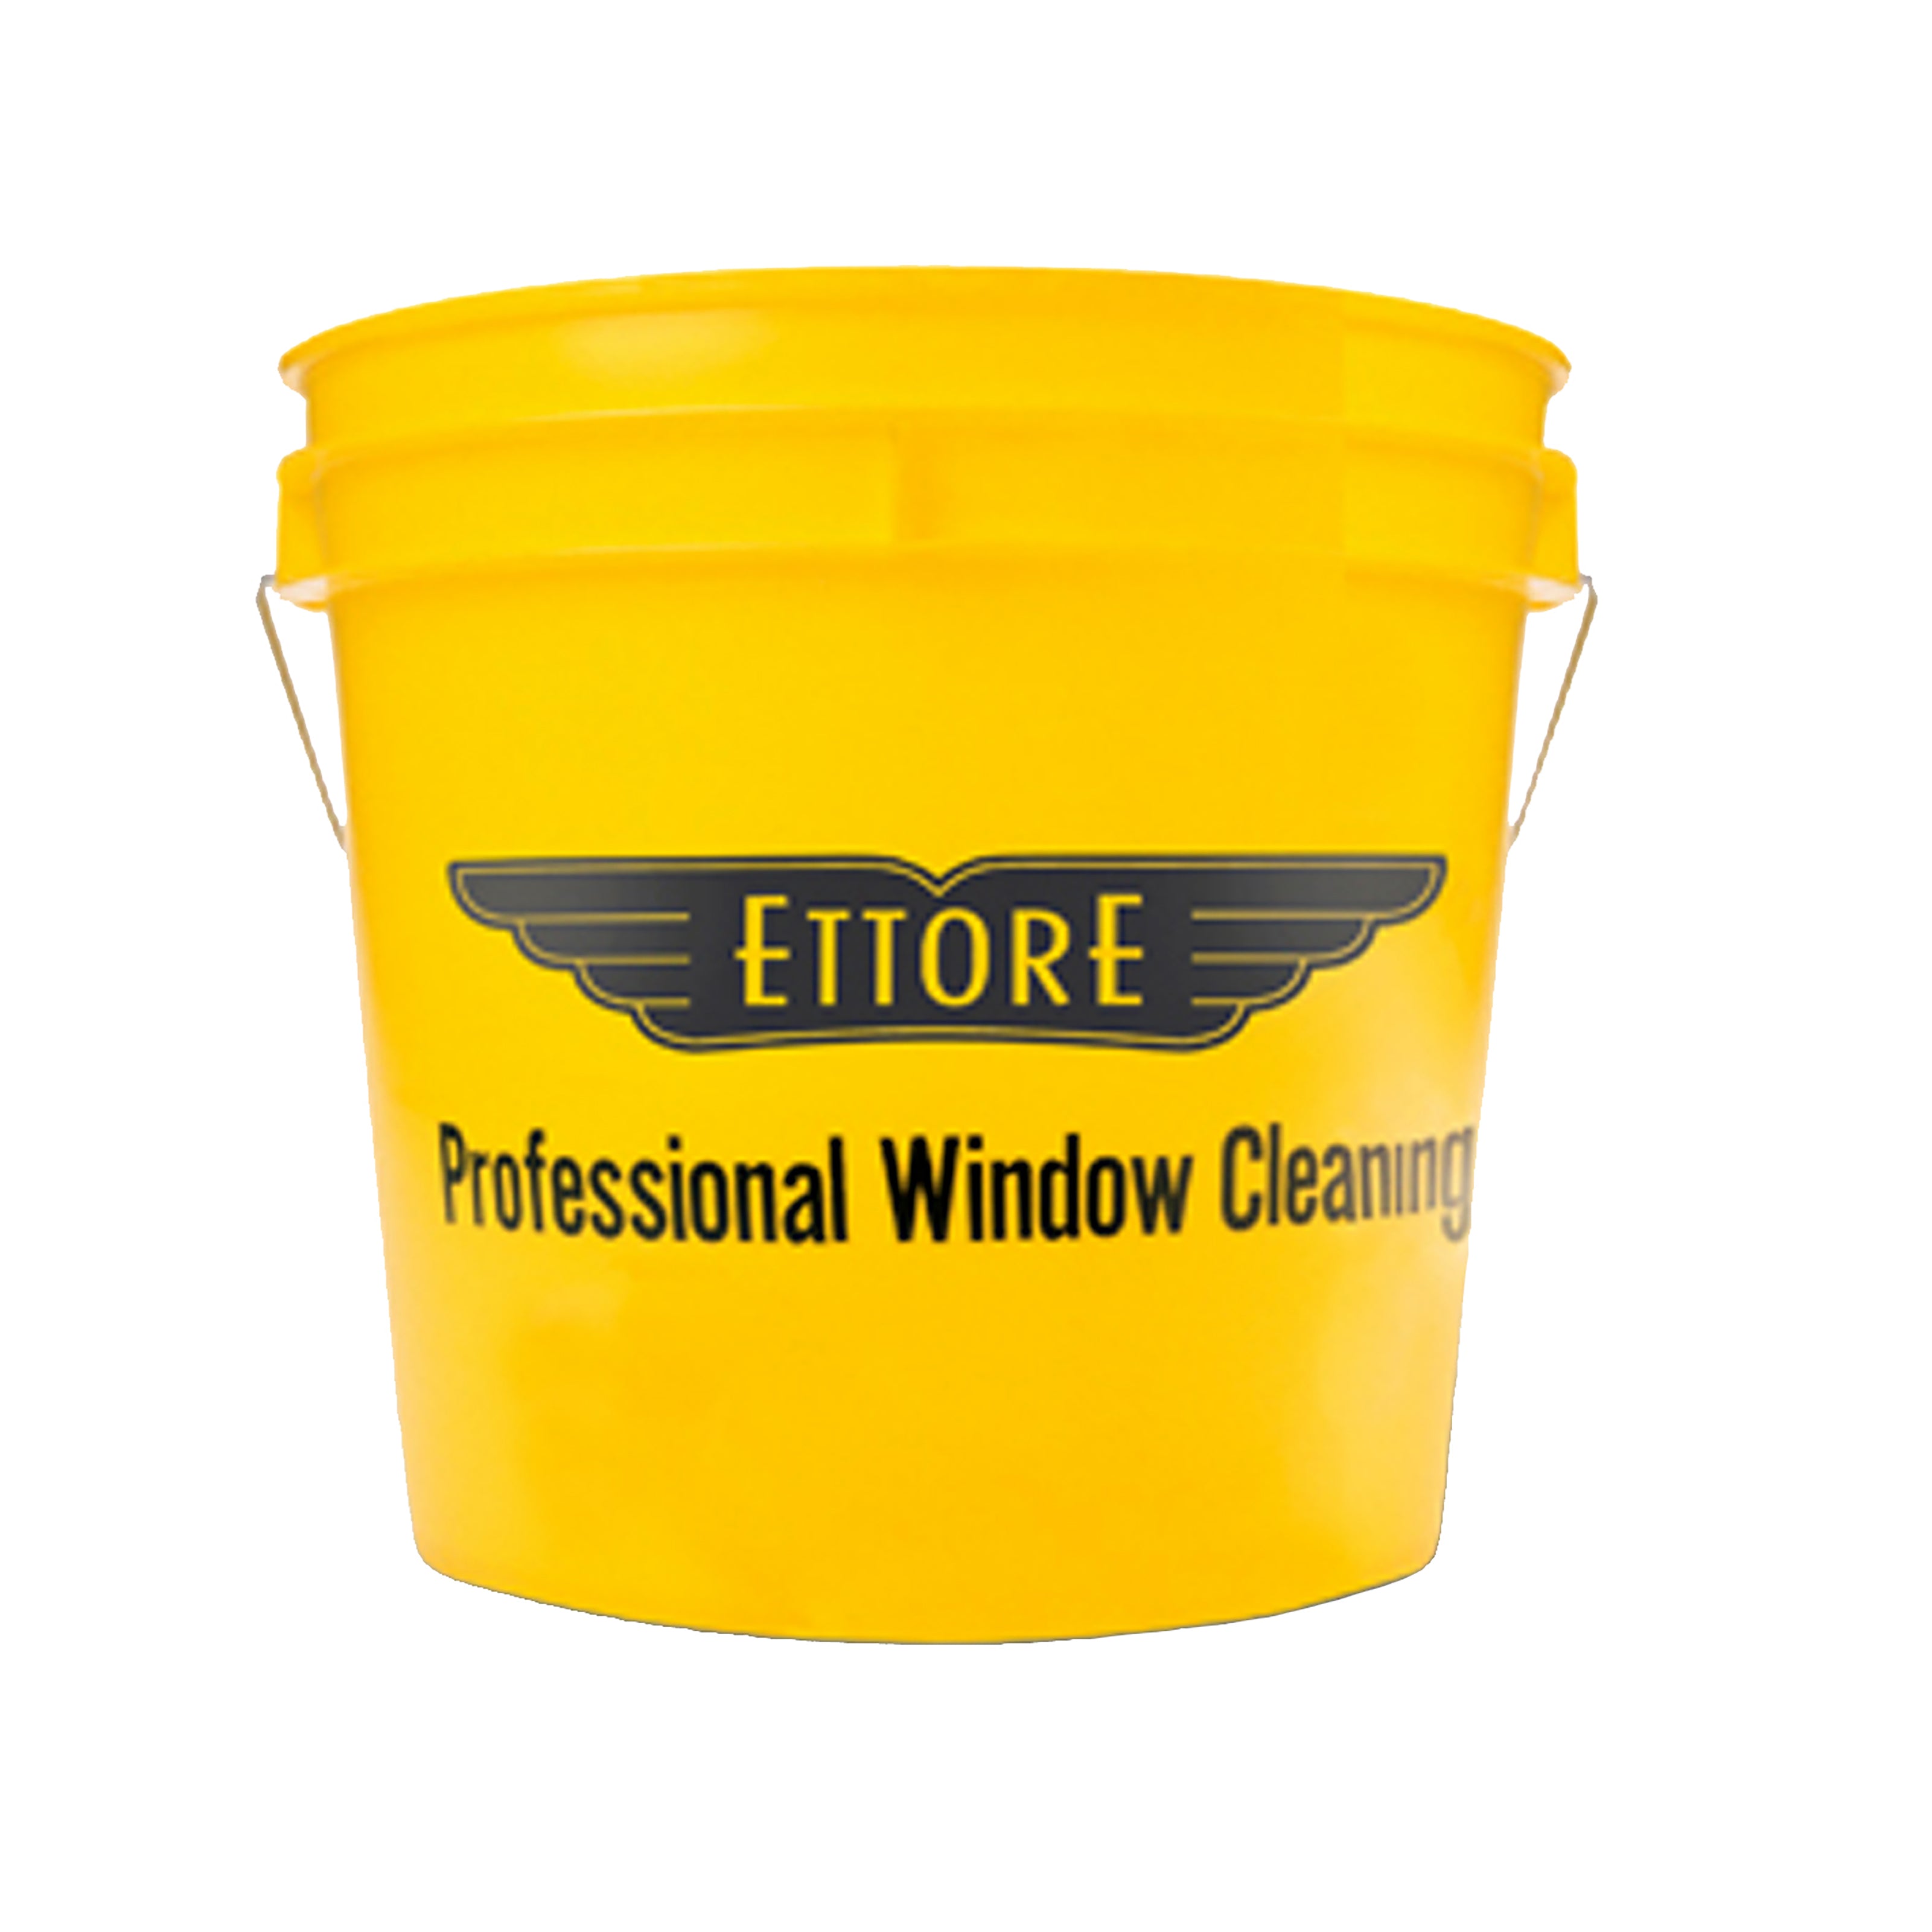 Ettore 3.5 Gallon Bucket, Ettore Window Cleaning